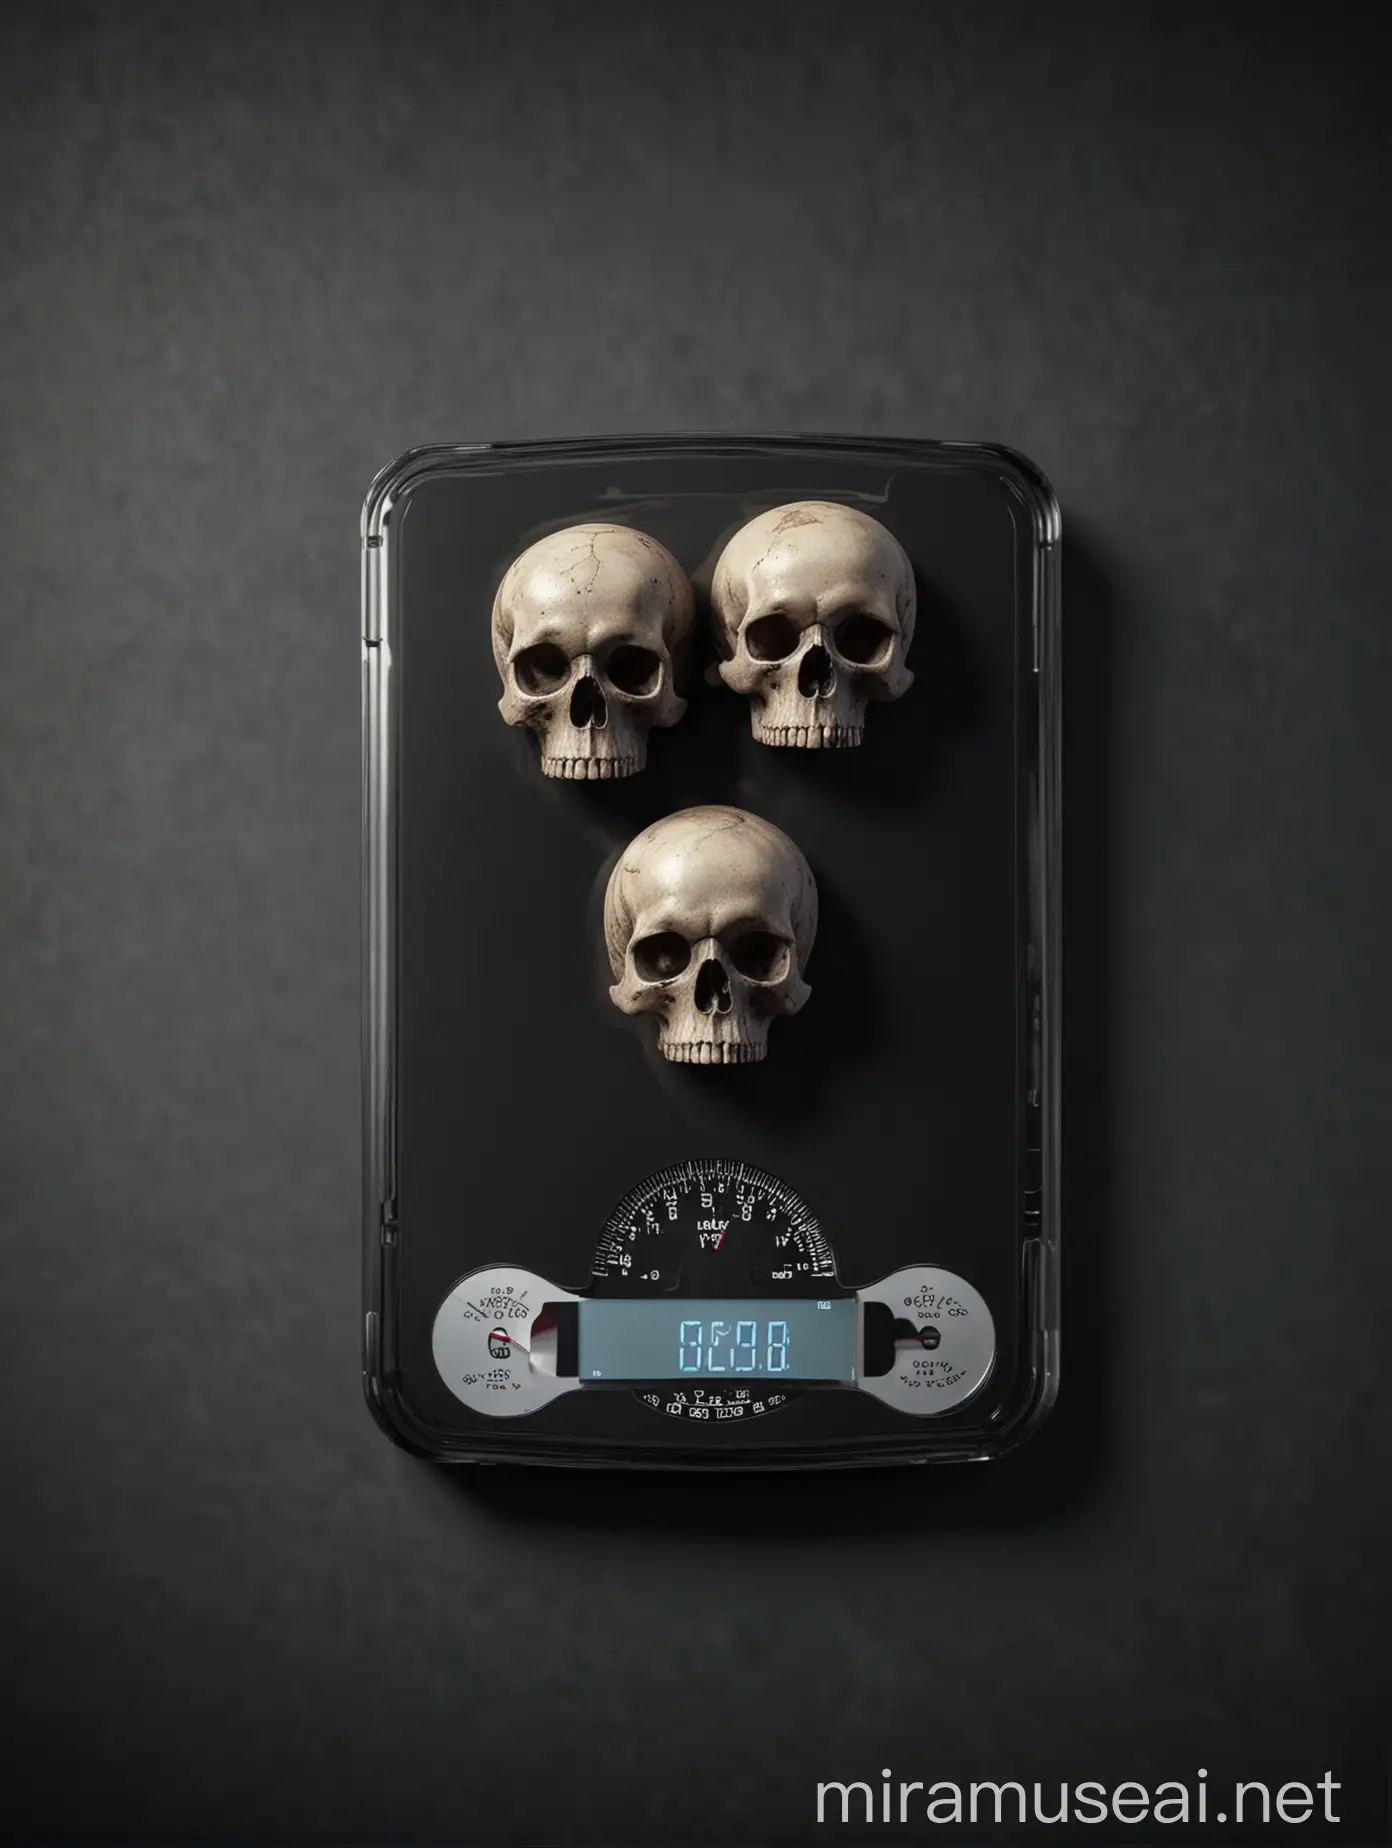 Realistic 3D Black Digital Pocket Scale with Skulls in Cinematic Lighting